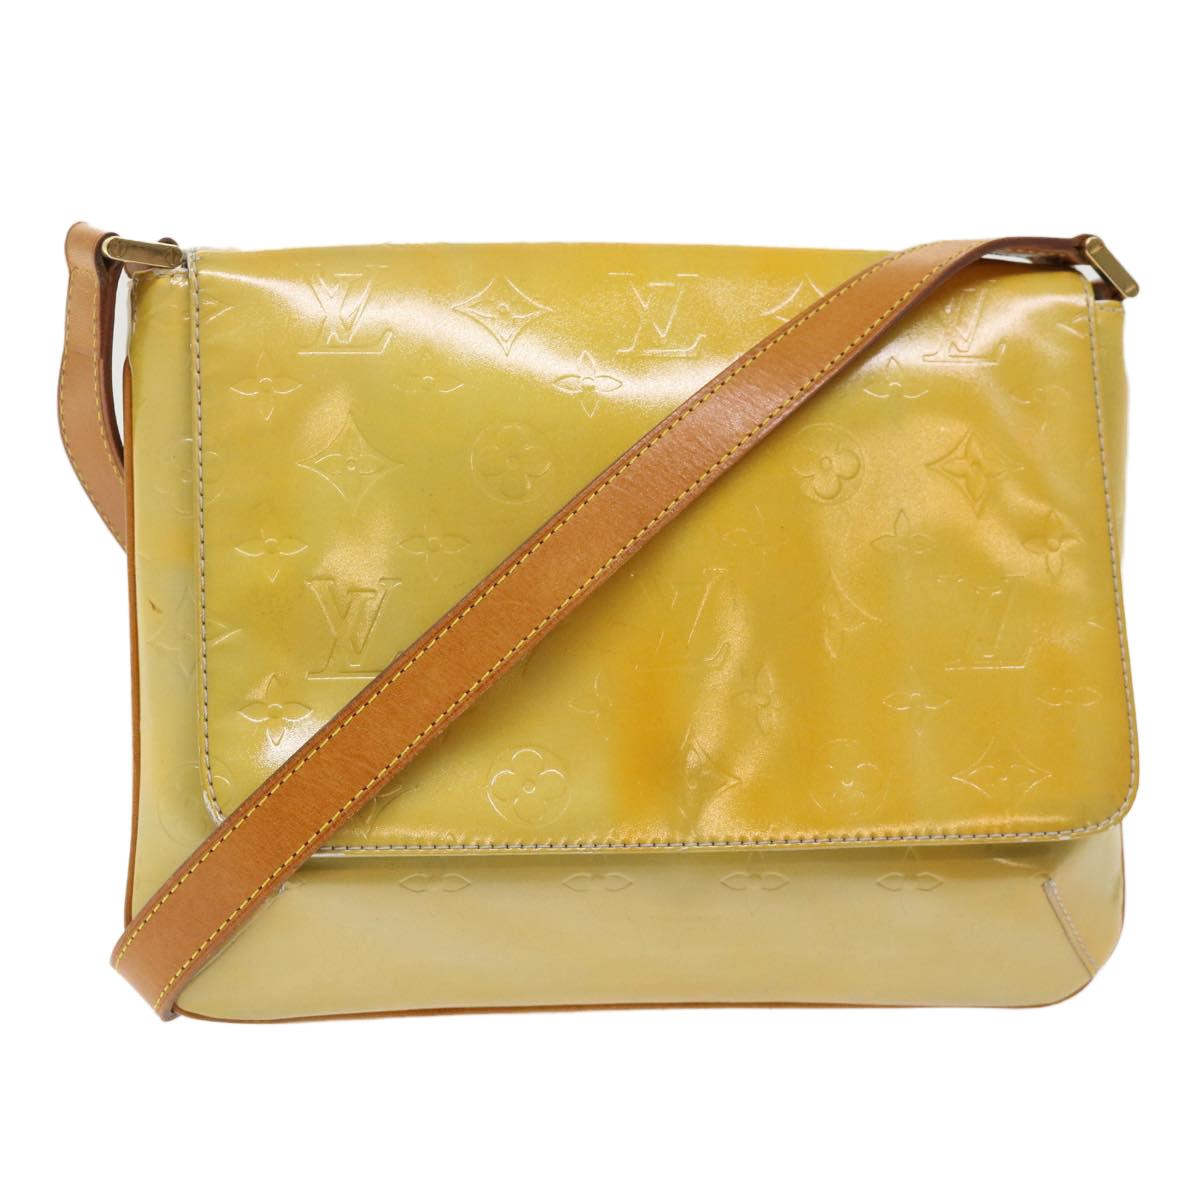 Bedford patent leather handbag Louis Vuitton Beige in Patent